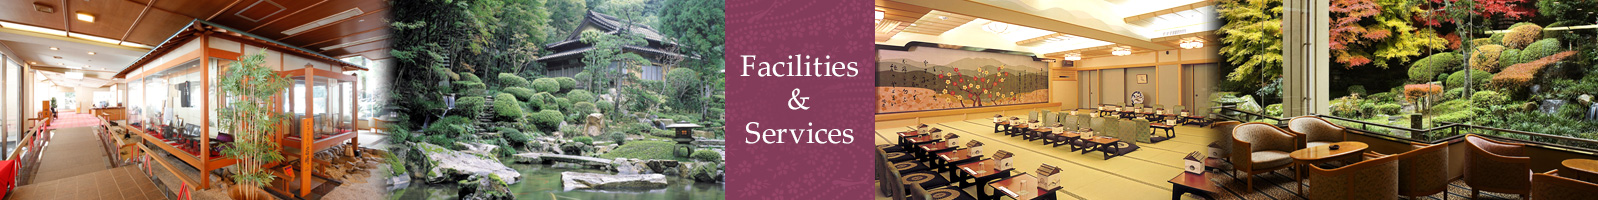 Facilities & Services